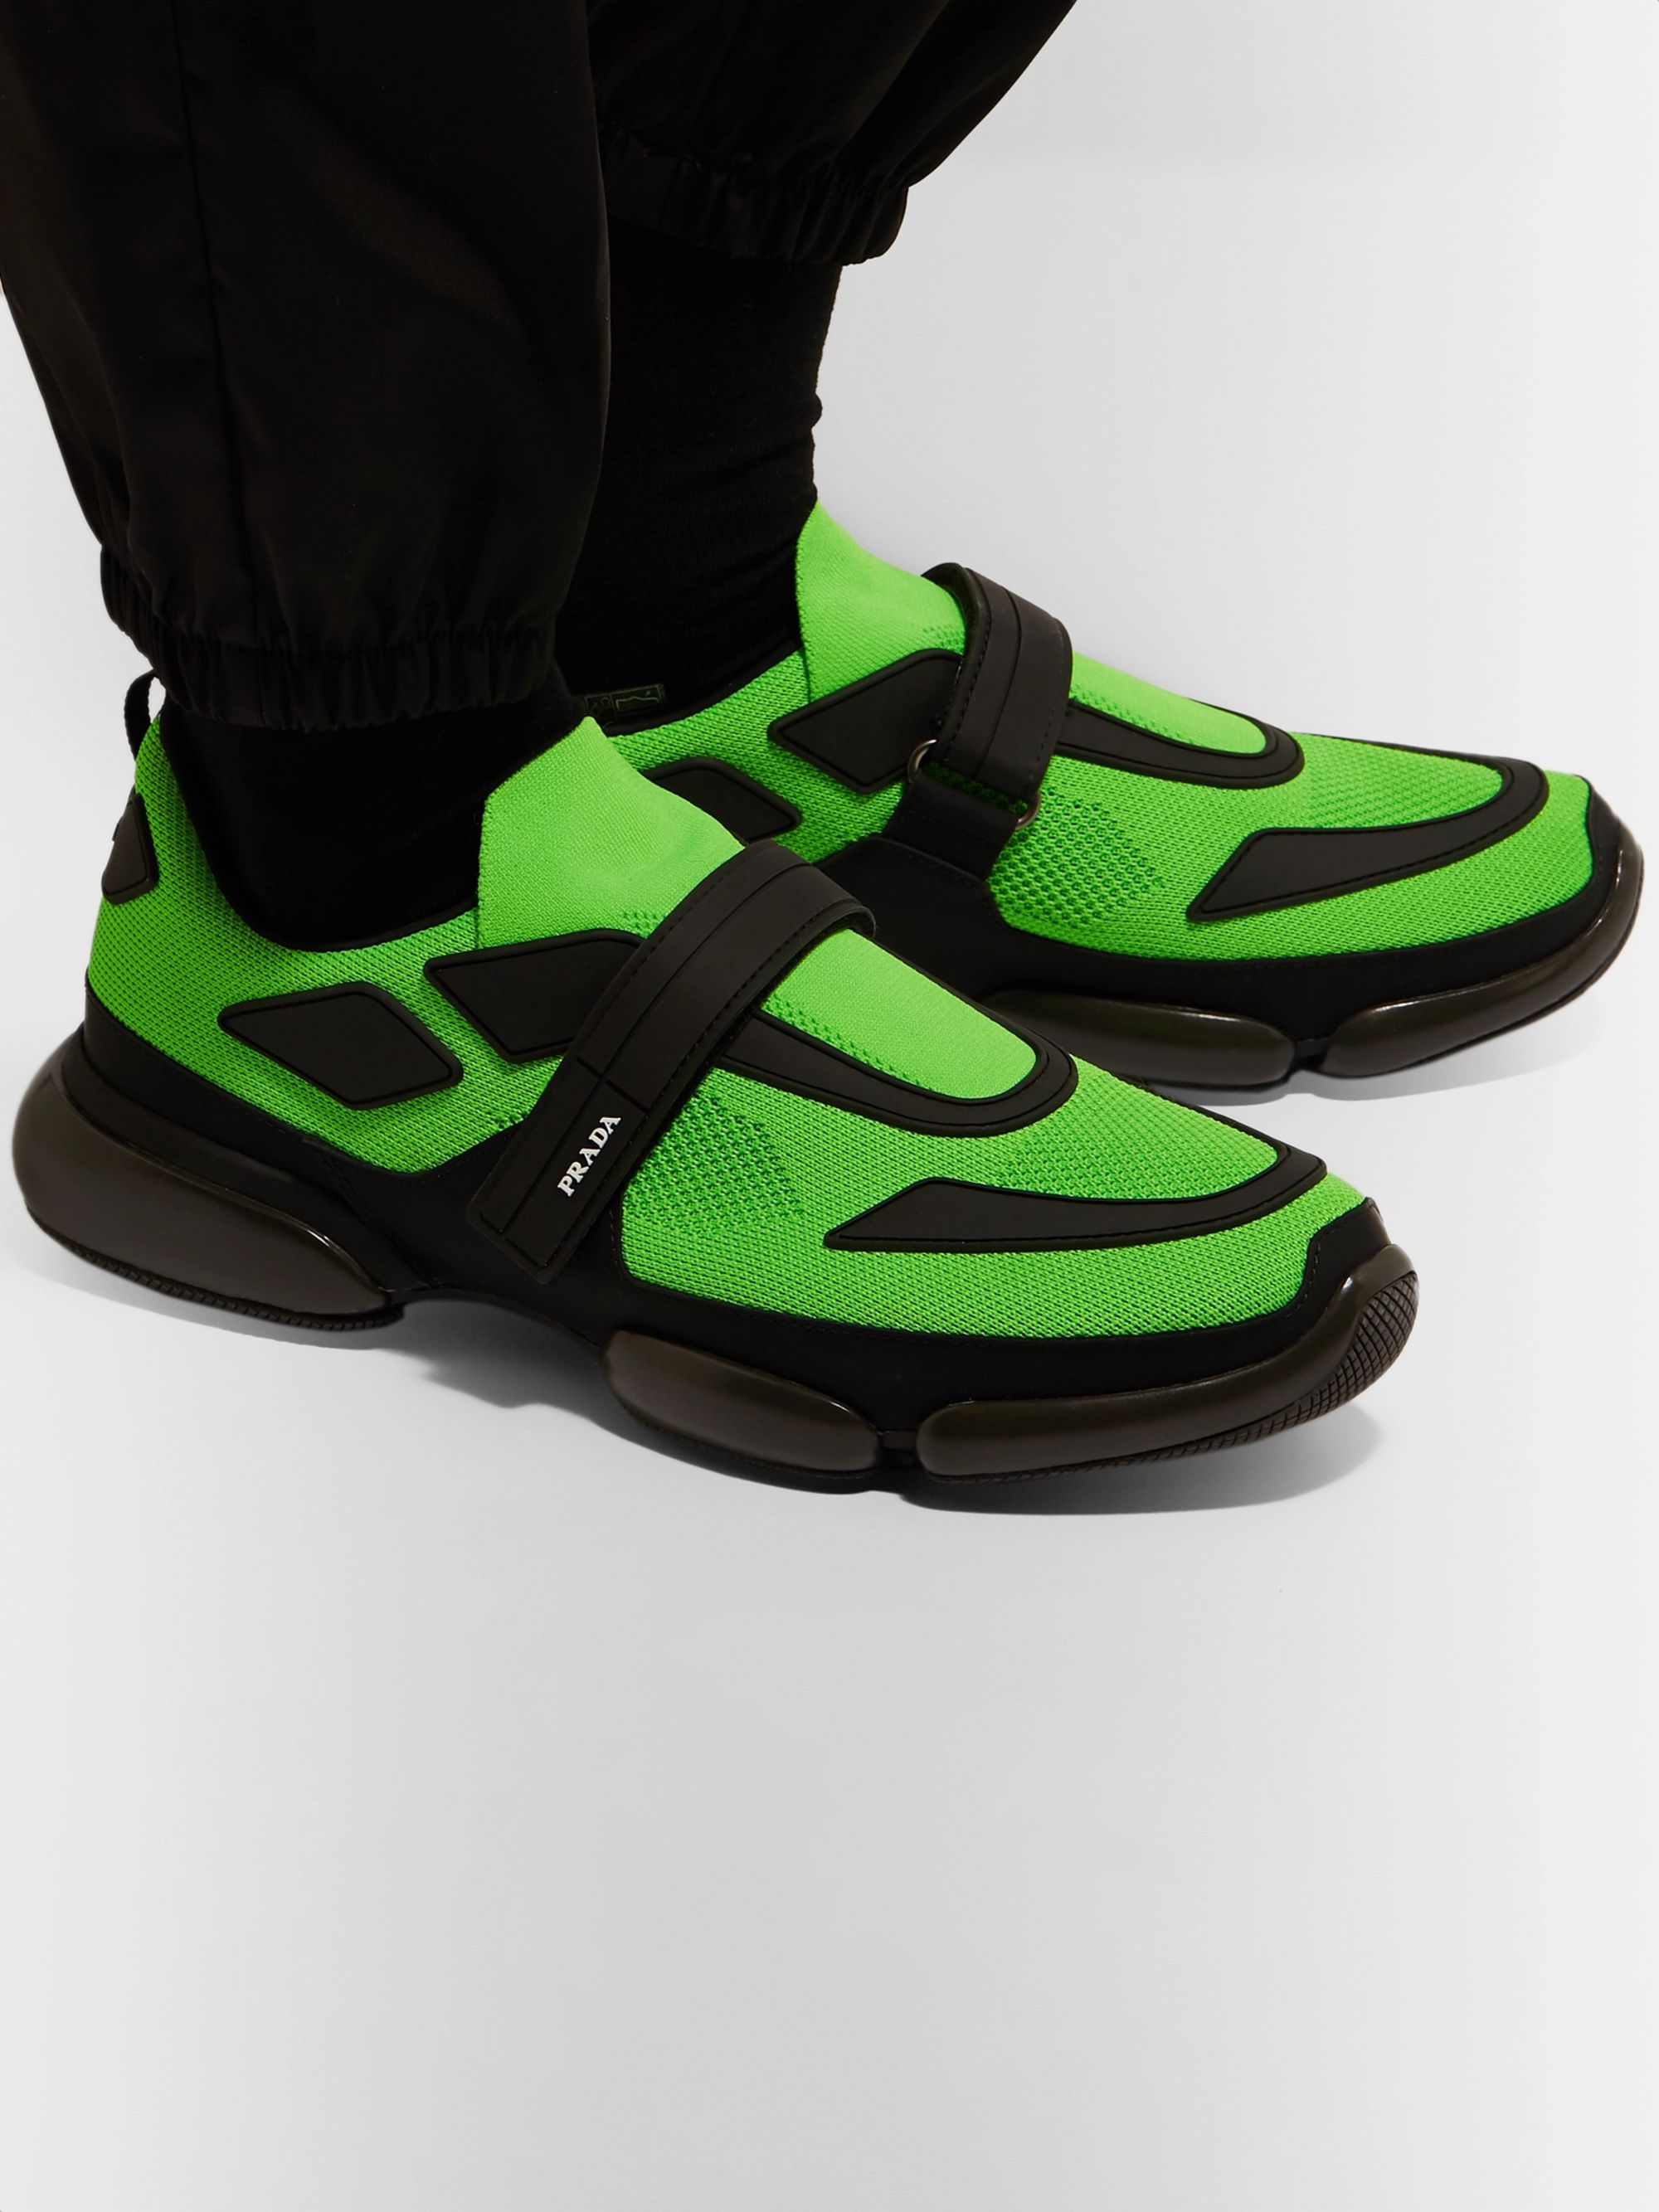 green prada shoes